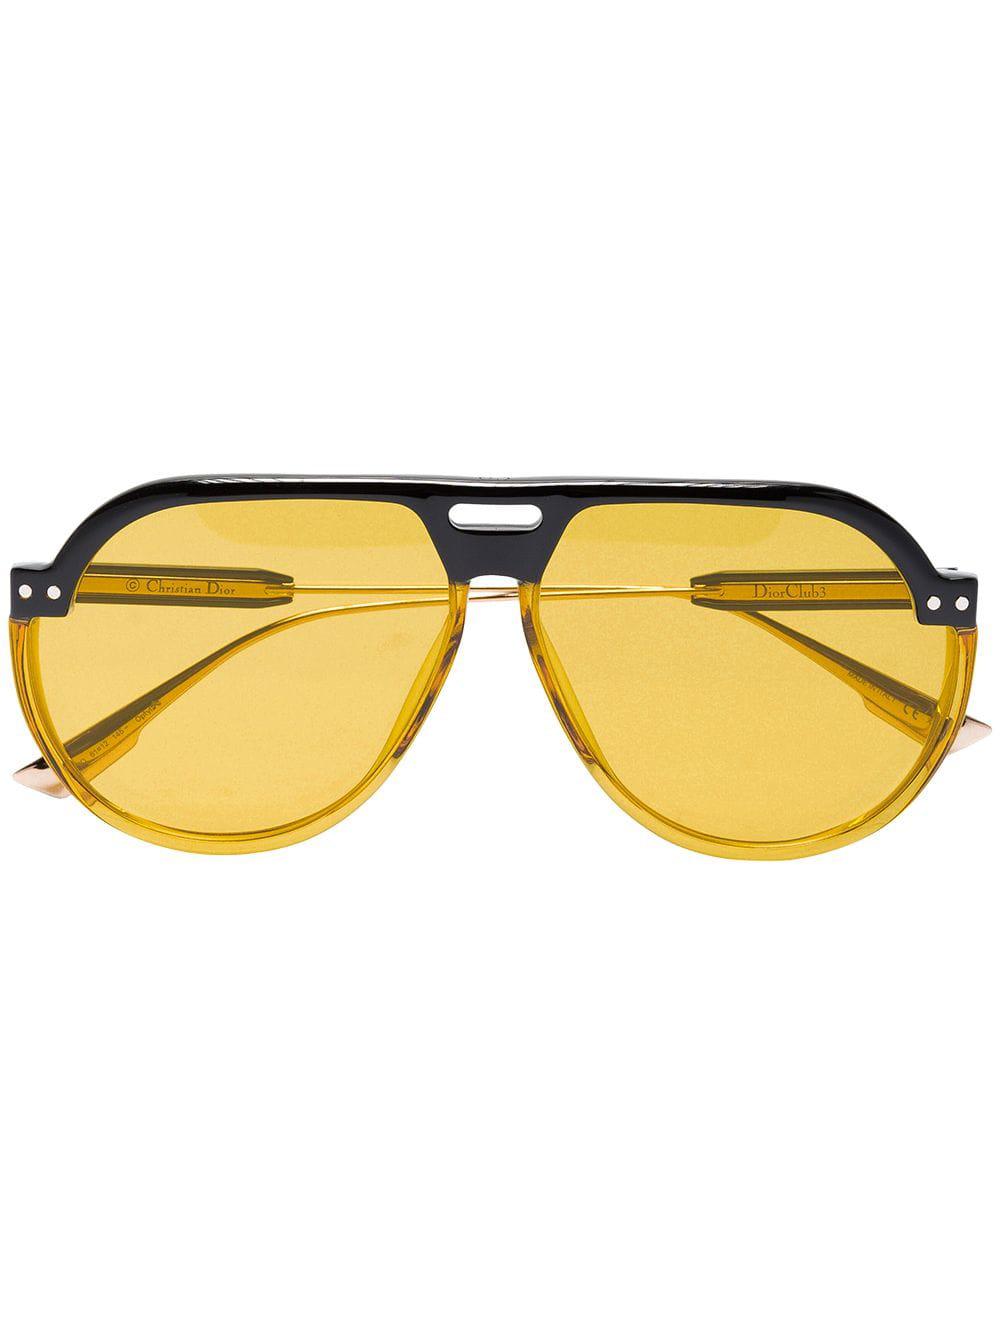 dior club sunglasses